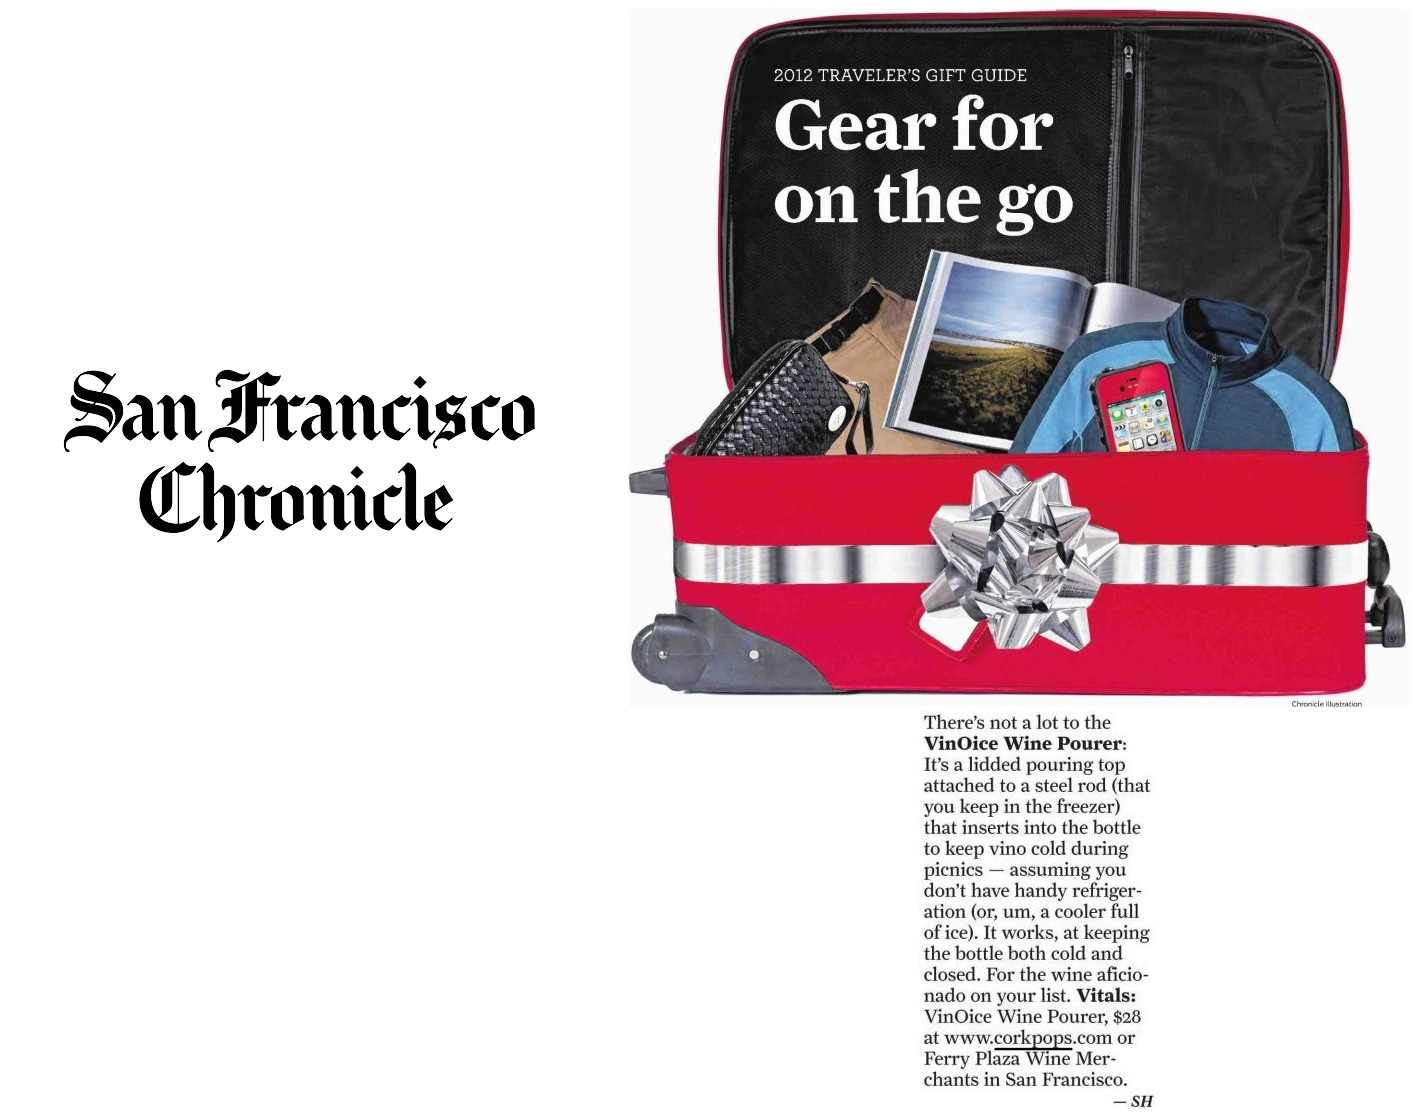 The San Francisco Chronicle